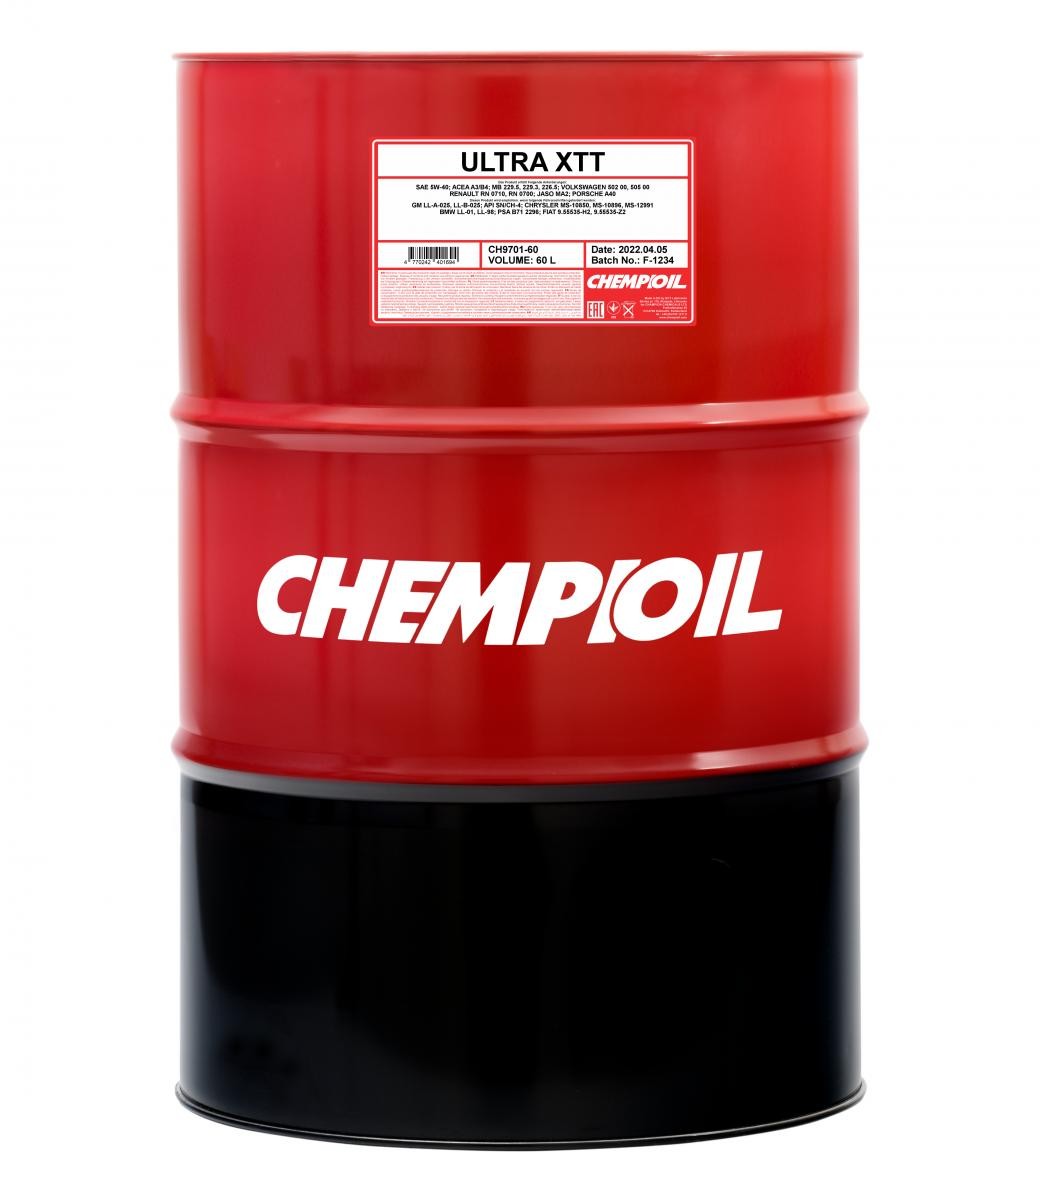 CHEMPIOIL Ultra, XTT 5W-40, 60l Motor oil CH9701-60 buy